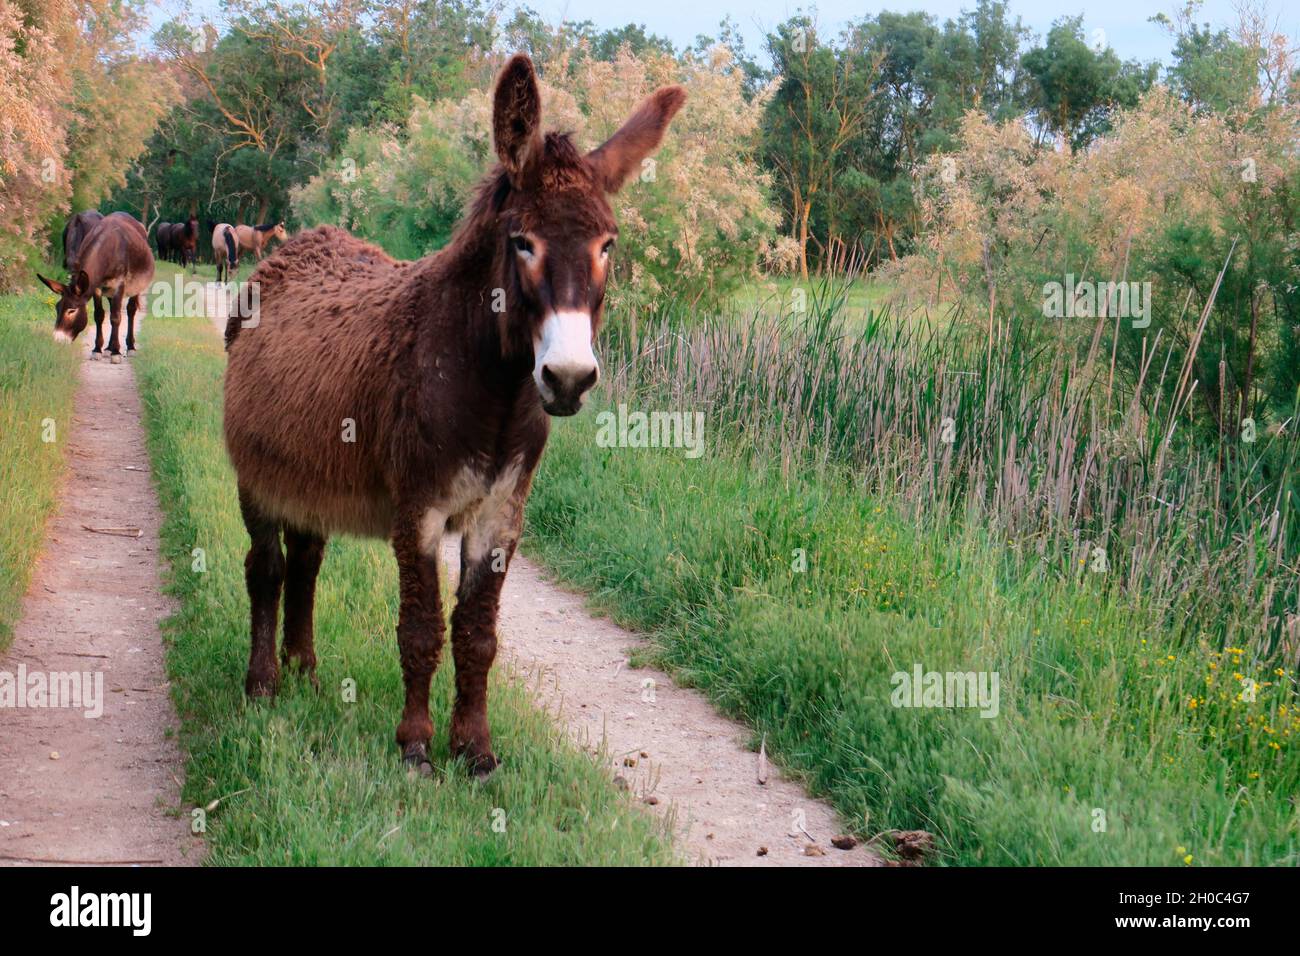 Donkeys (Equus asinus) on a path, Europe Stock Photo